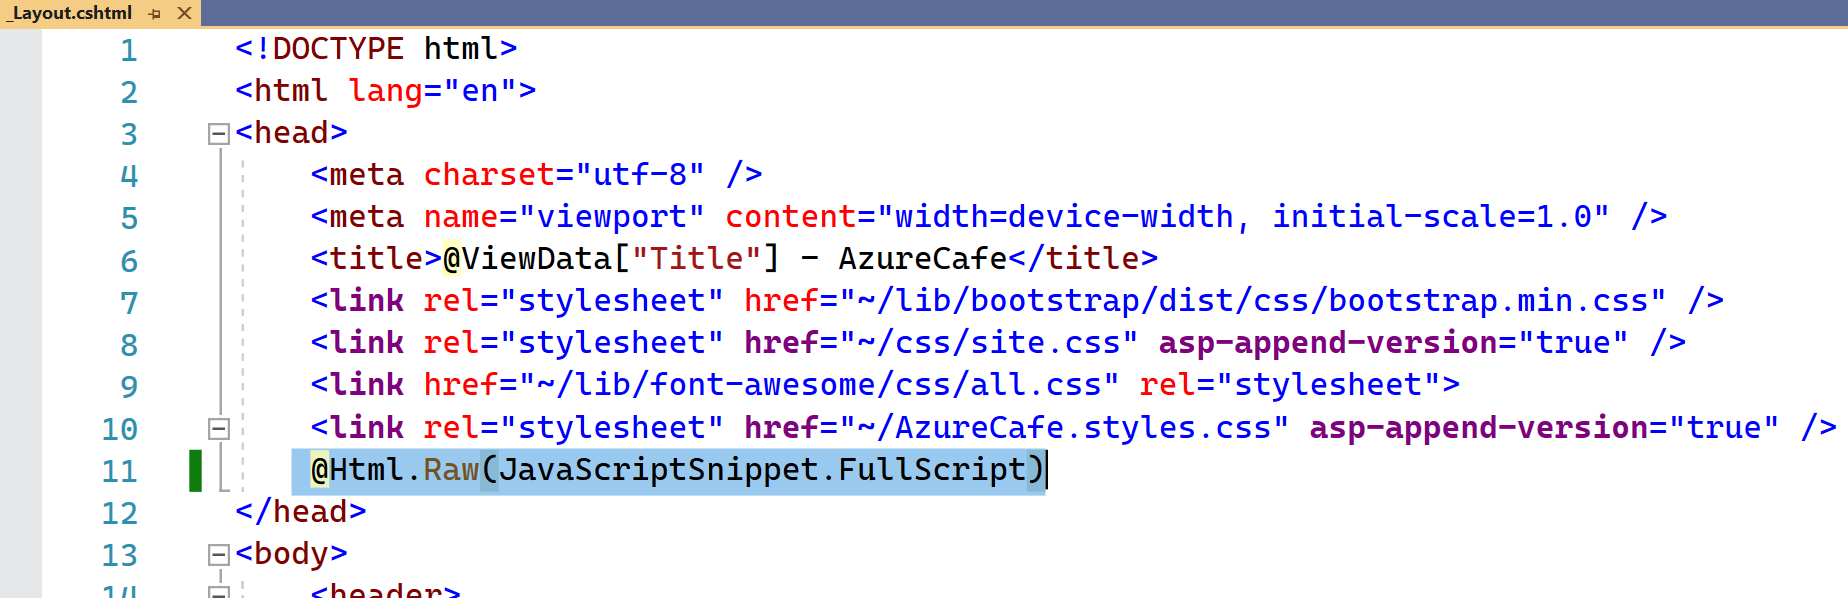 Visual Studio 中 _Layout.cshtml 文件的屏幕截图，该文件的 head 节中突出显示了上述代码行。